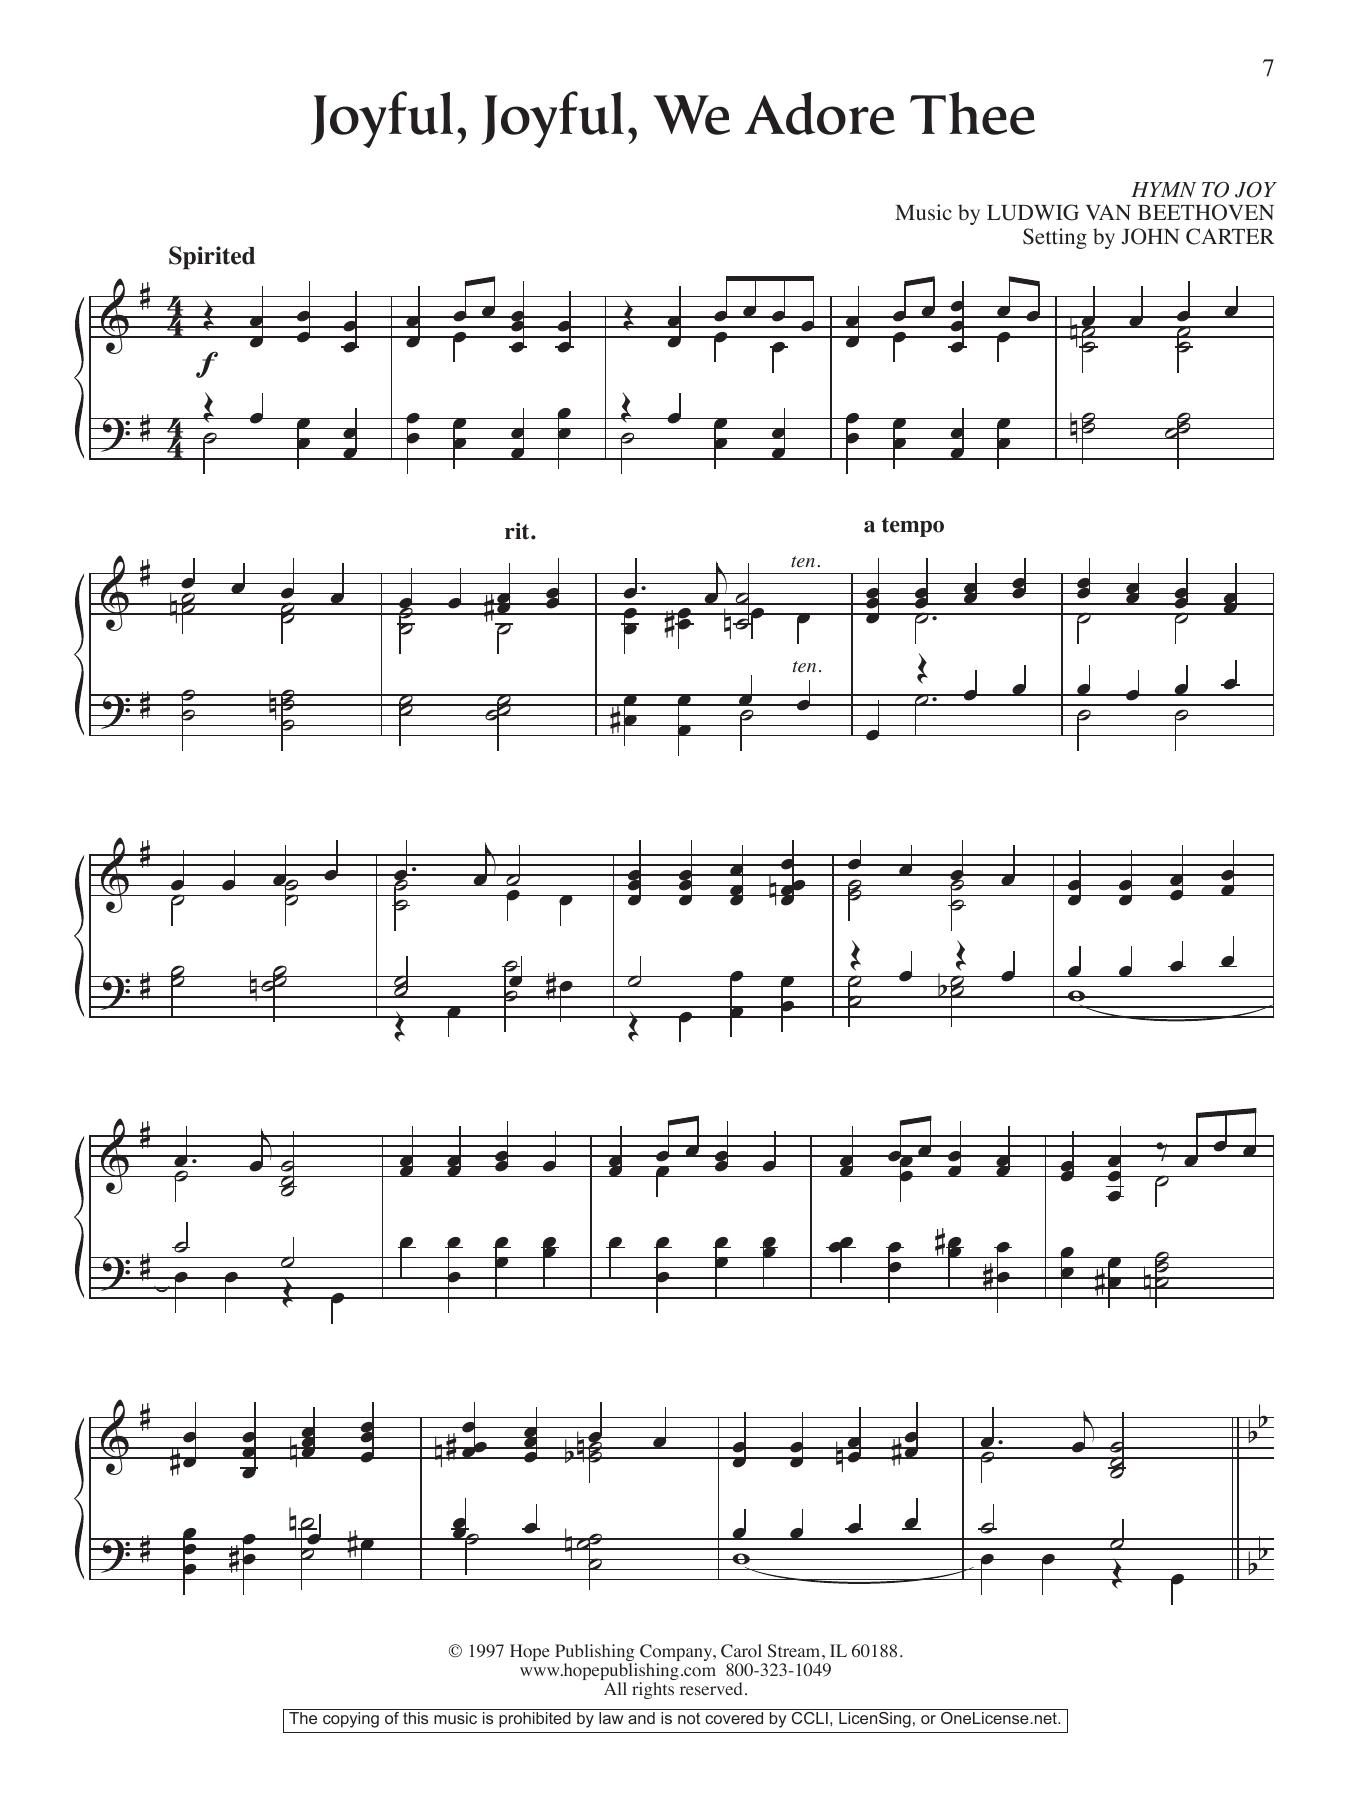 Download John Carter Joyful, Joyful, We Adore Thee Sheet Music and learn how to play Piano Solo PDF digital score in minutes